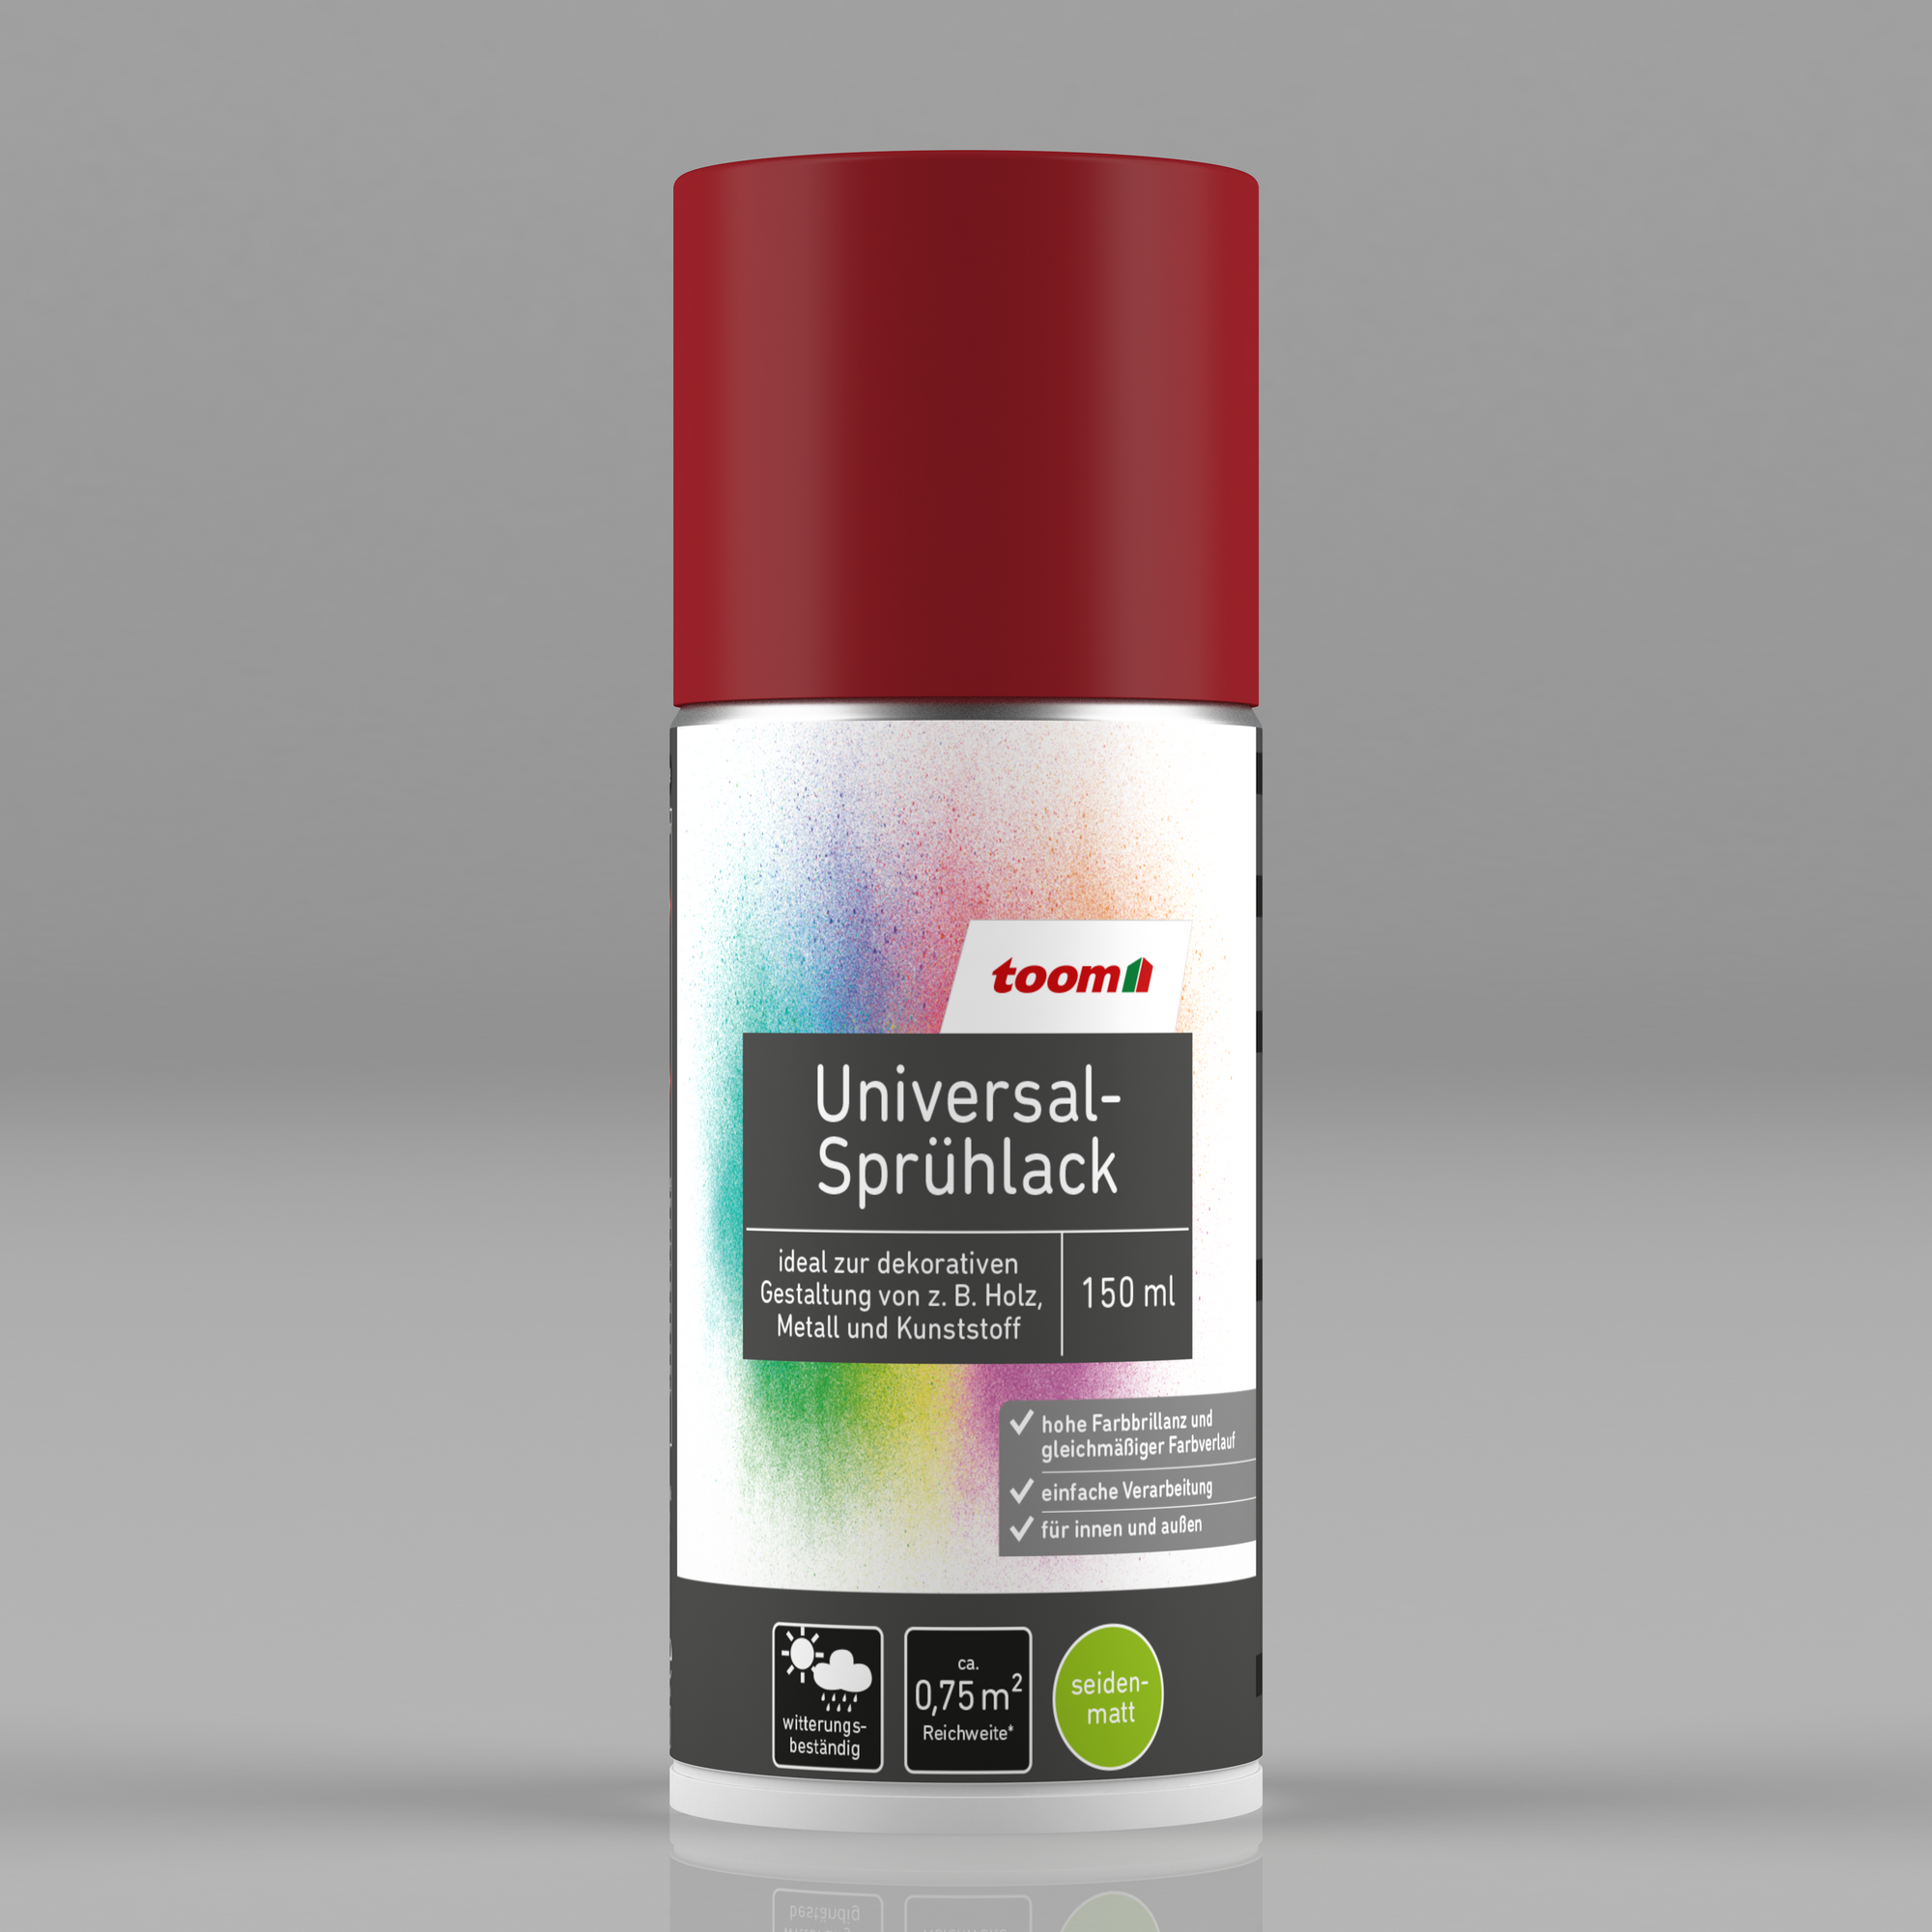 Universal-Sprühlack rubinrot seidenmatt 150 ml + product picture